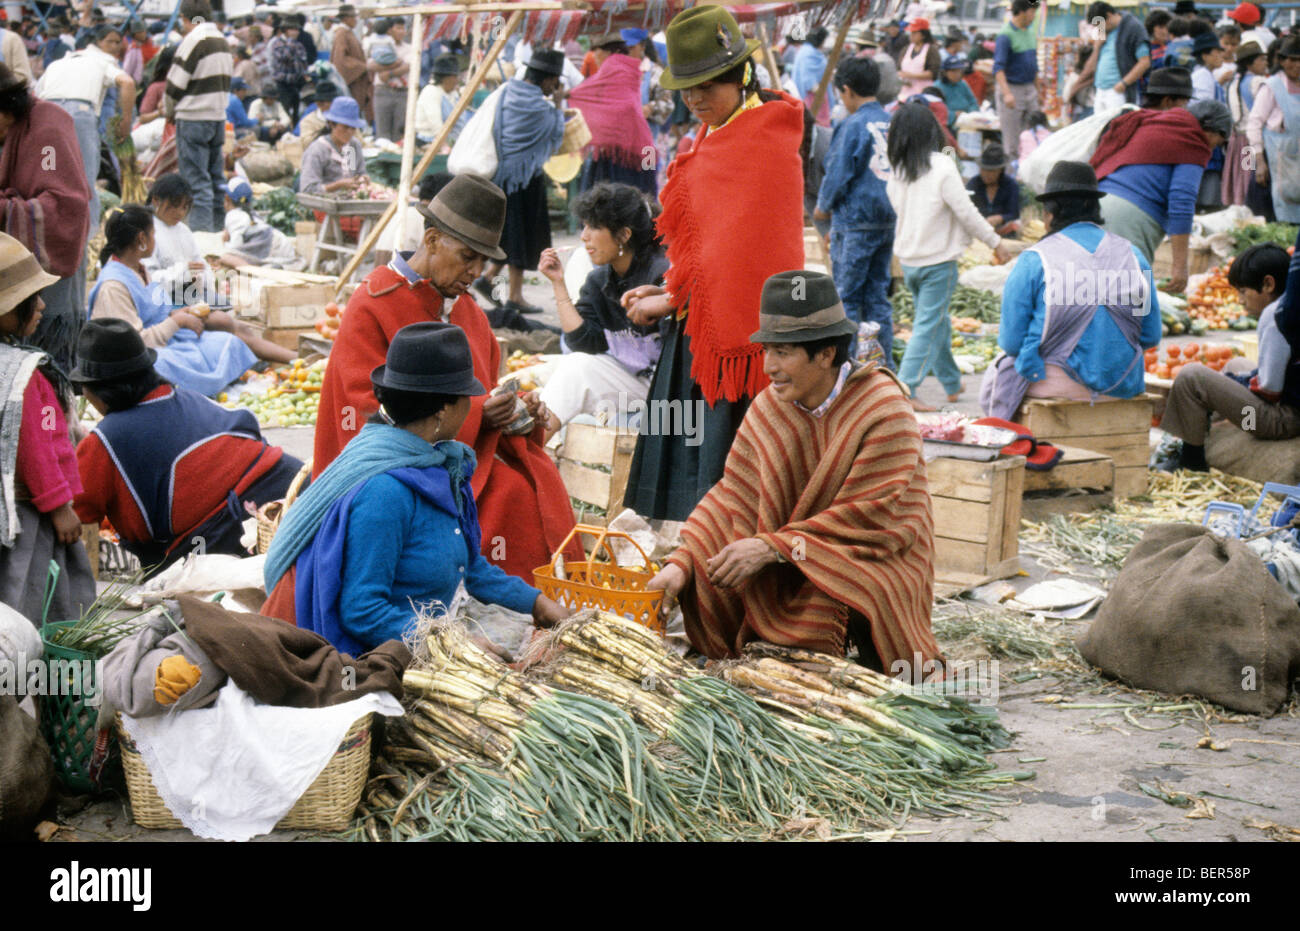 Group of traditionally dressed leek sellers large pile of long stemmed leeks talking.  Ecuadorian highlands local market. Stock Photo